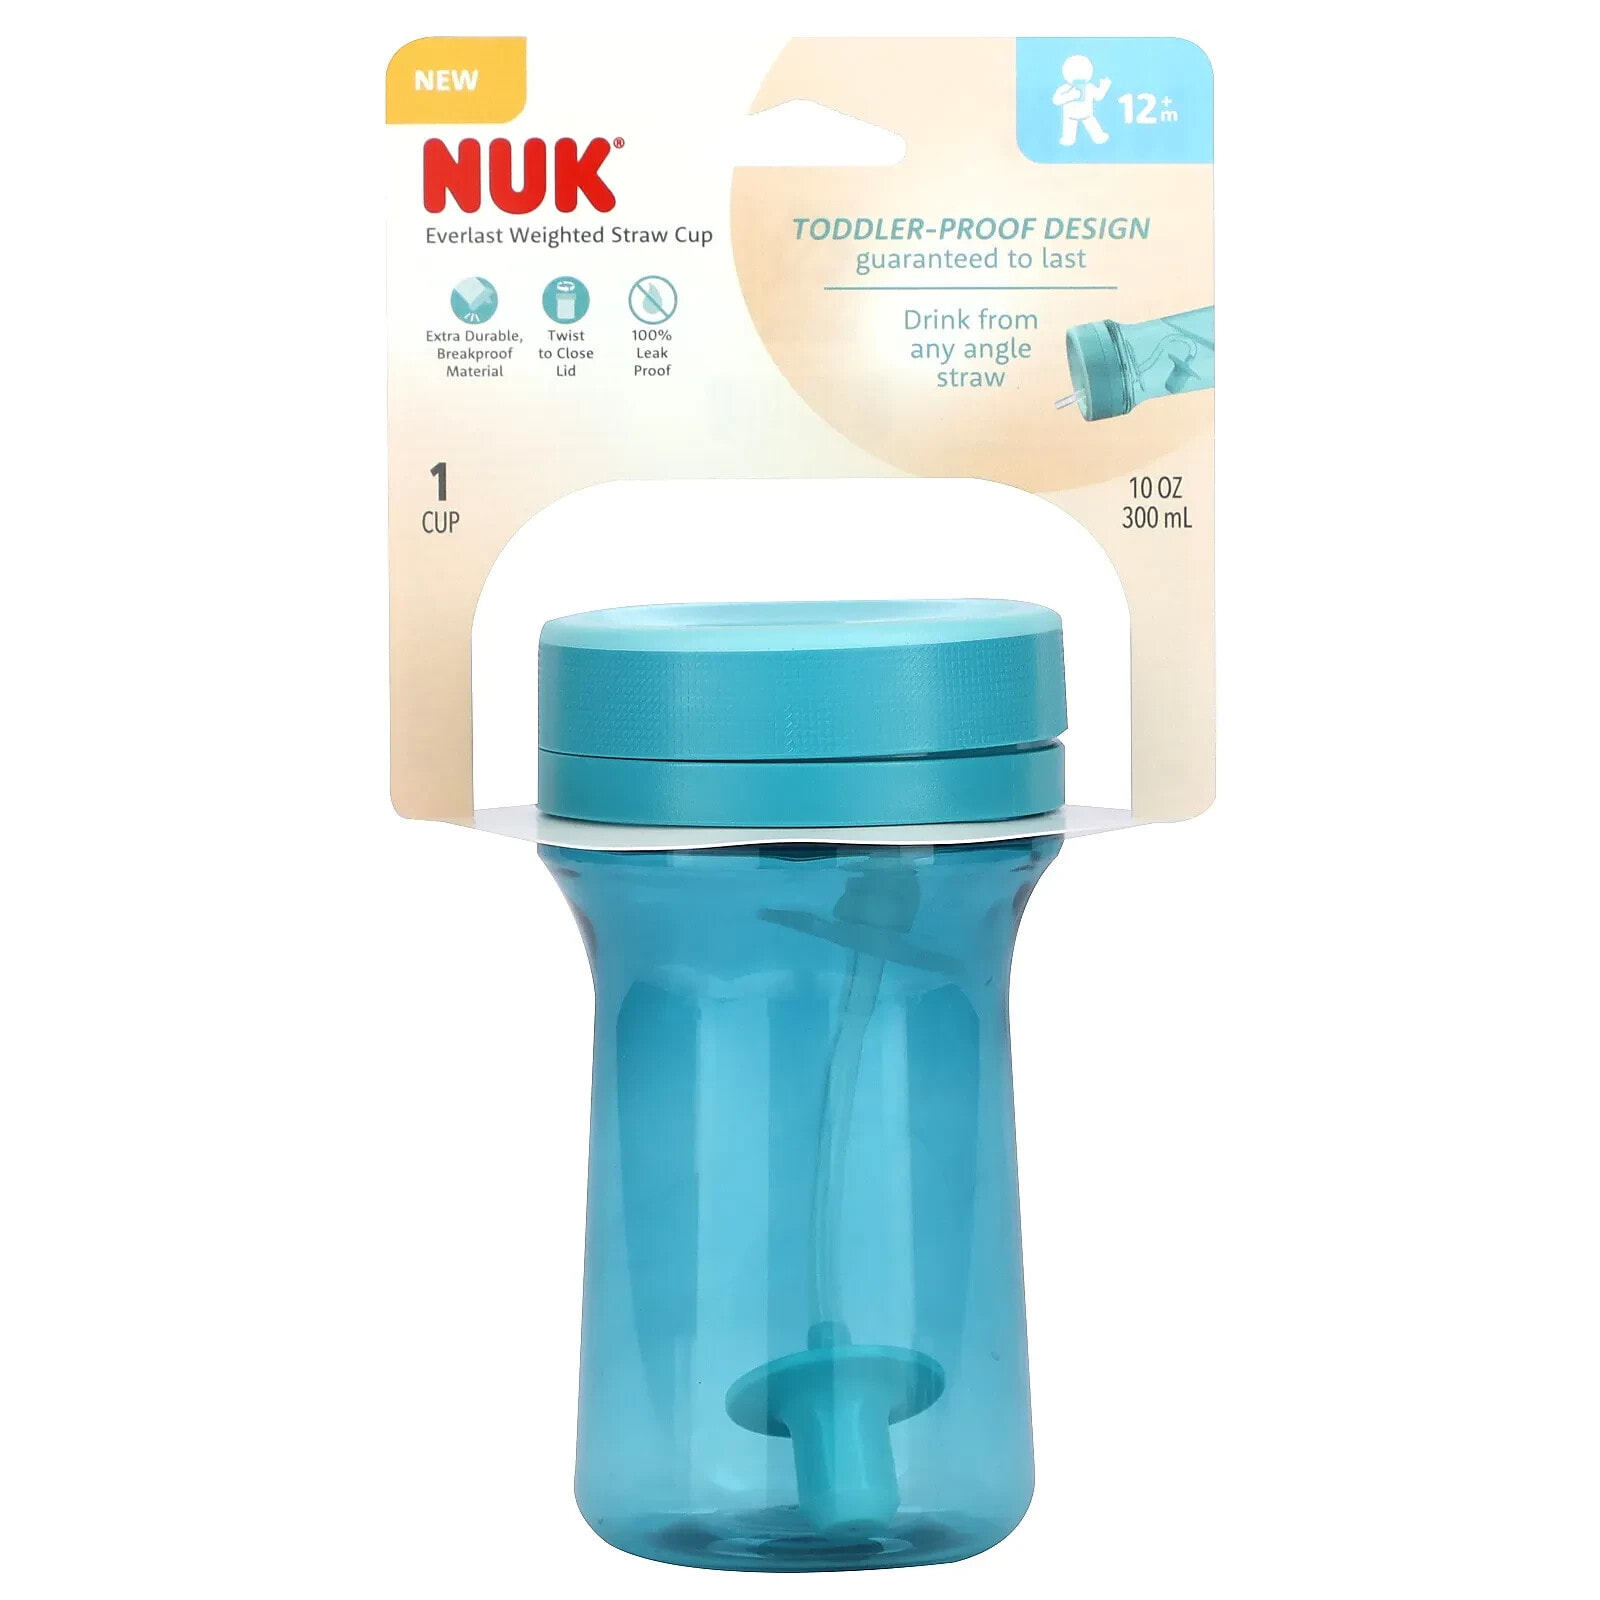 NUK, Everlast Weighted Straw Cup, для детей от 12 месяцев, бирюзовый, 300 мл (10 унций)